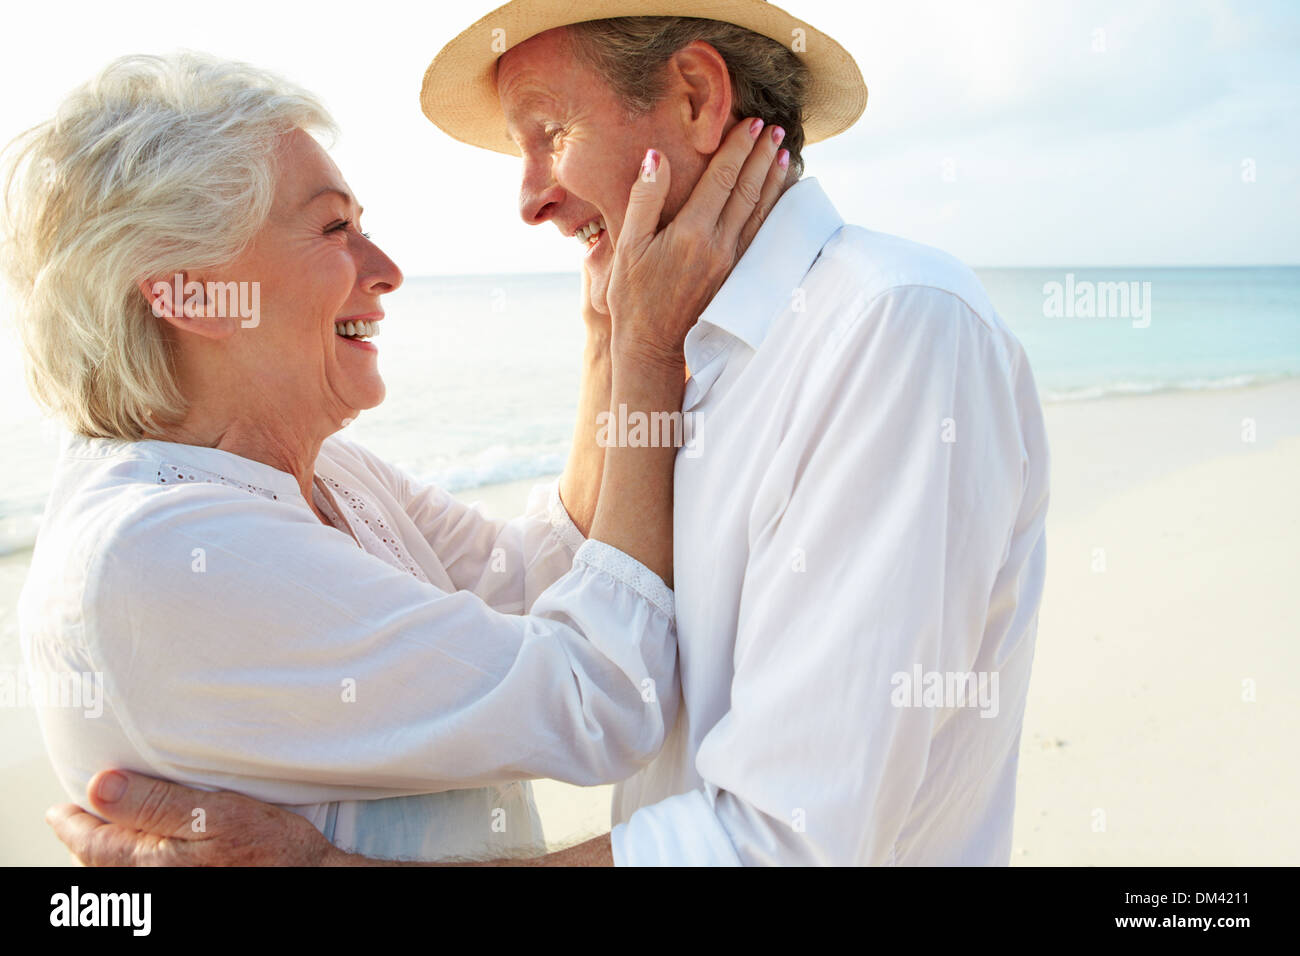 Affectionate Senior Couple On Tropical Beach Holiday Stock Photo